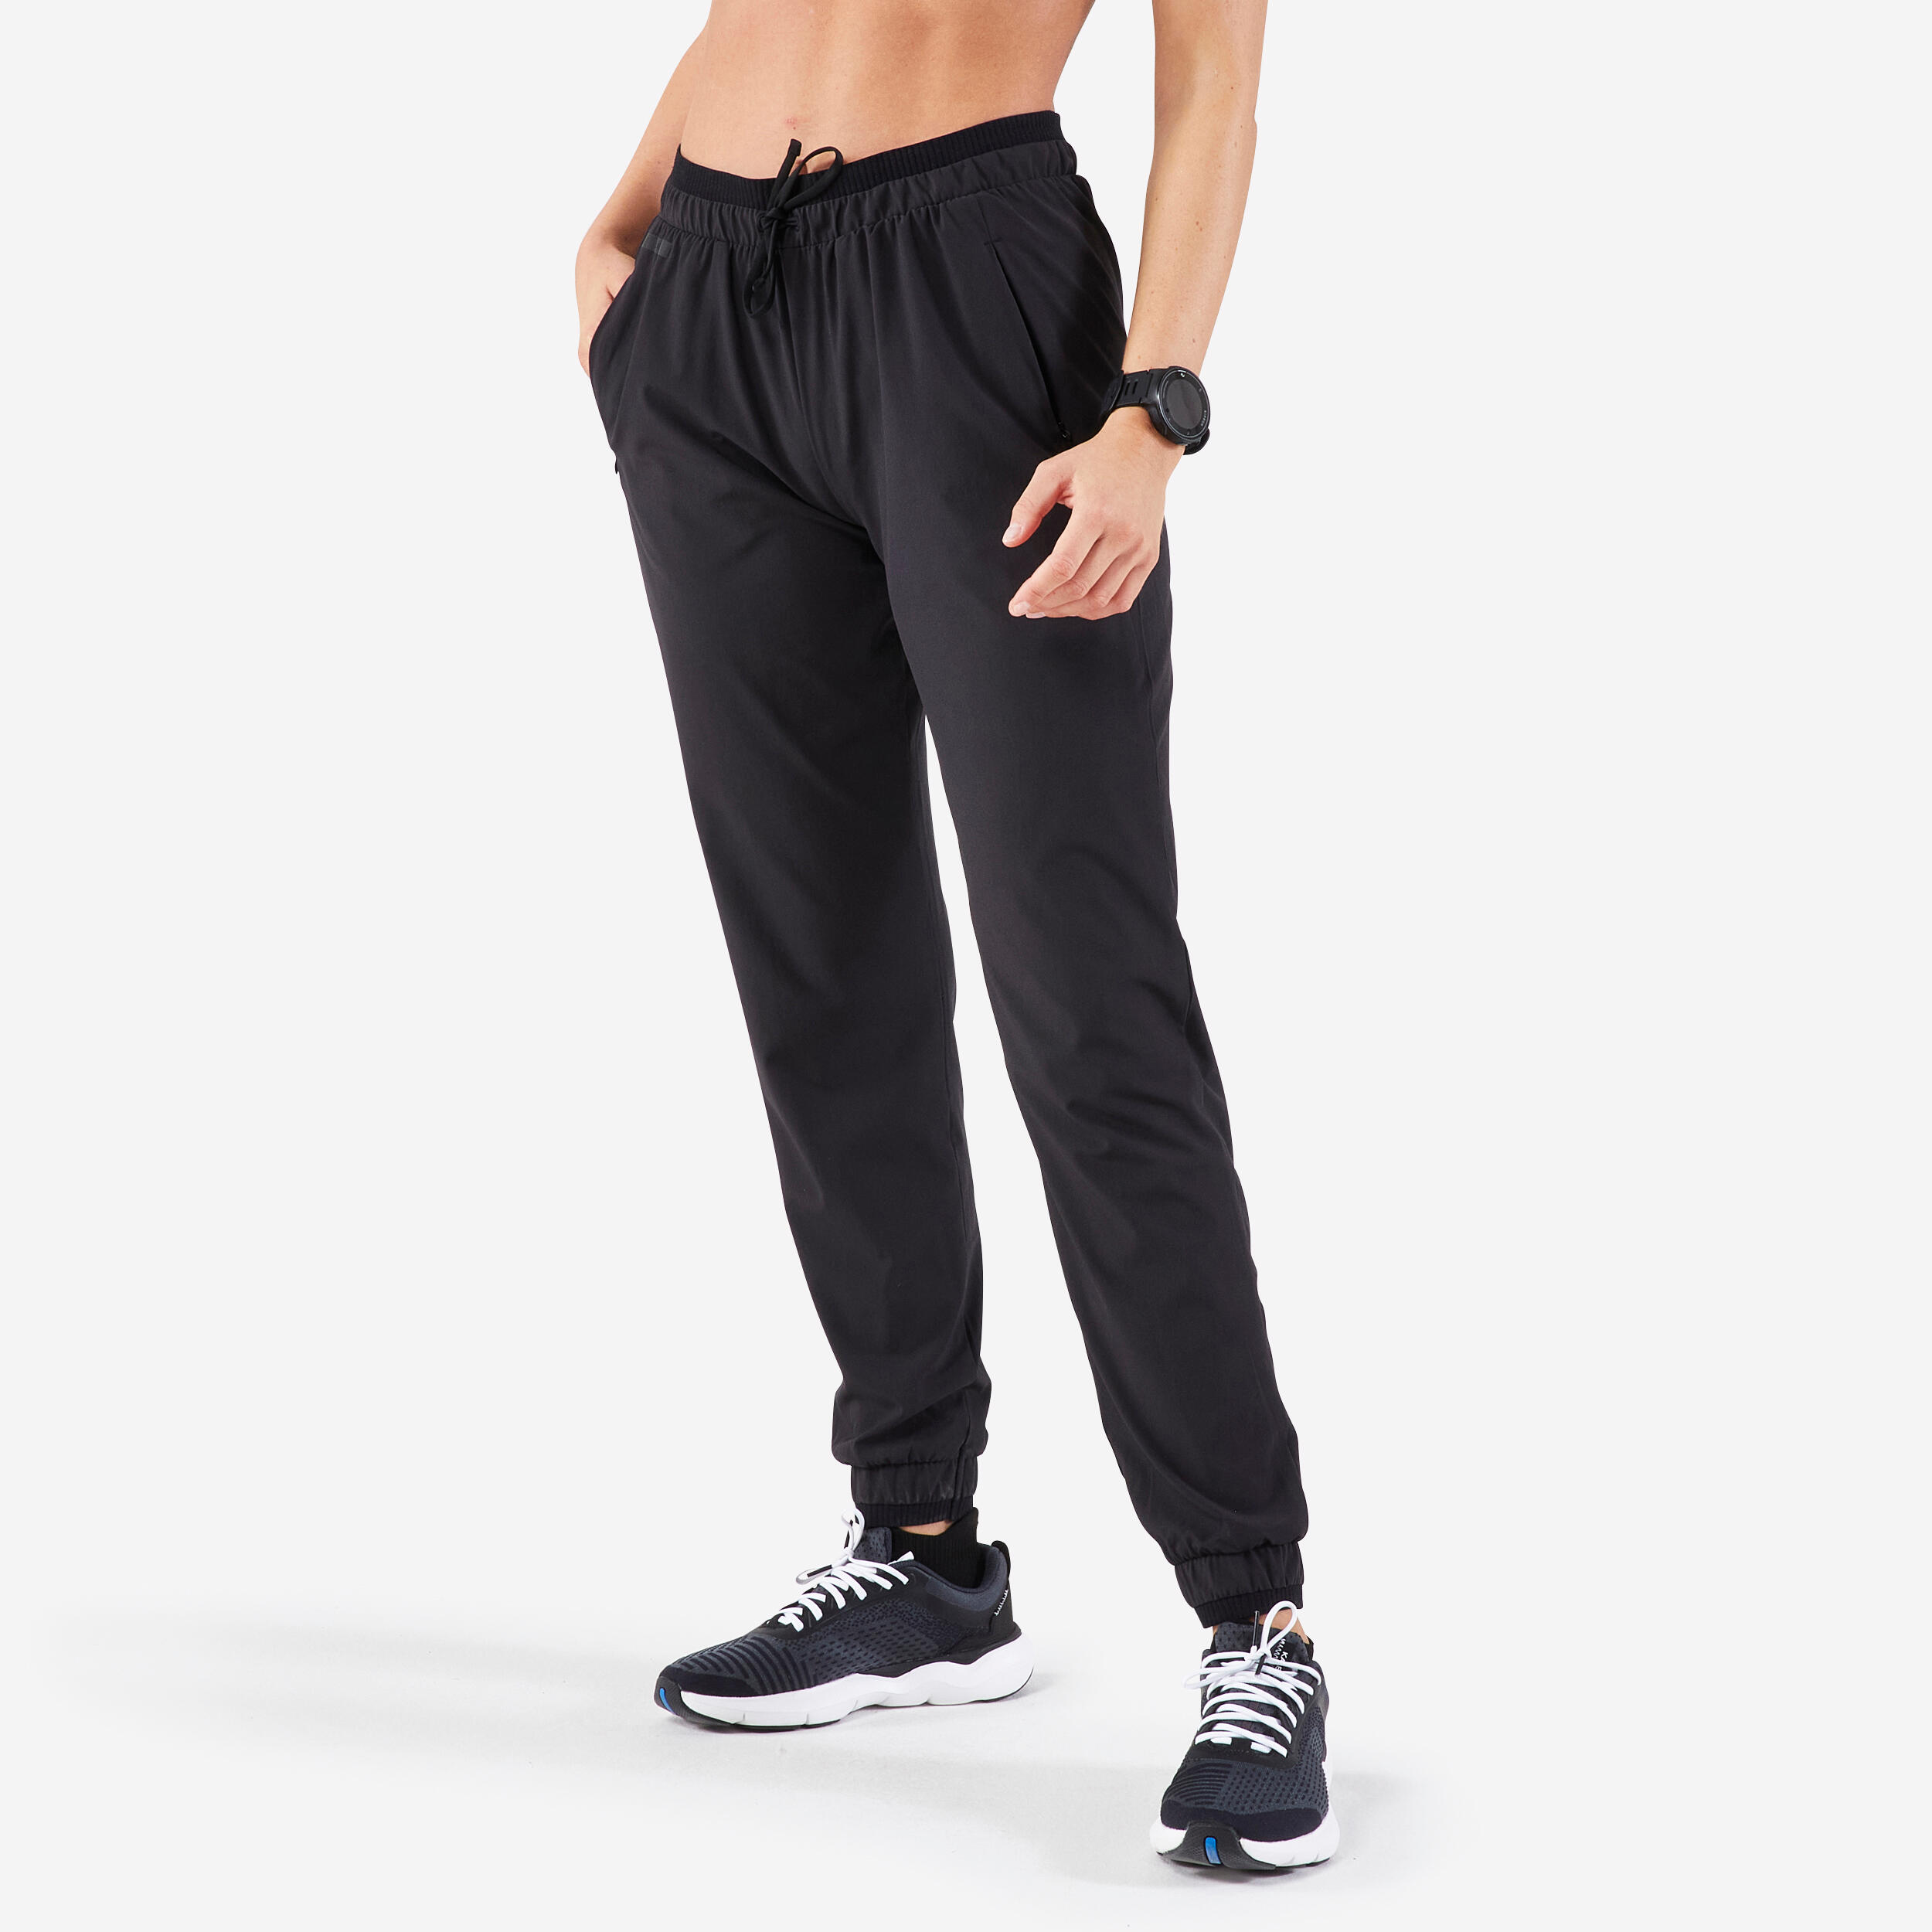 Women's Breathable Jogging Pants – Run Dry Black - KALENJI